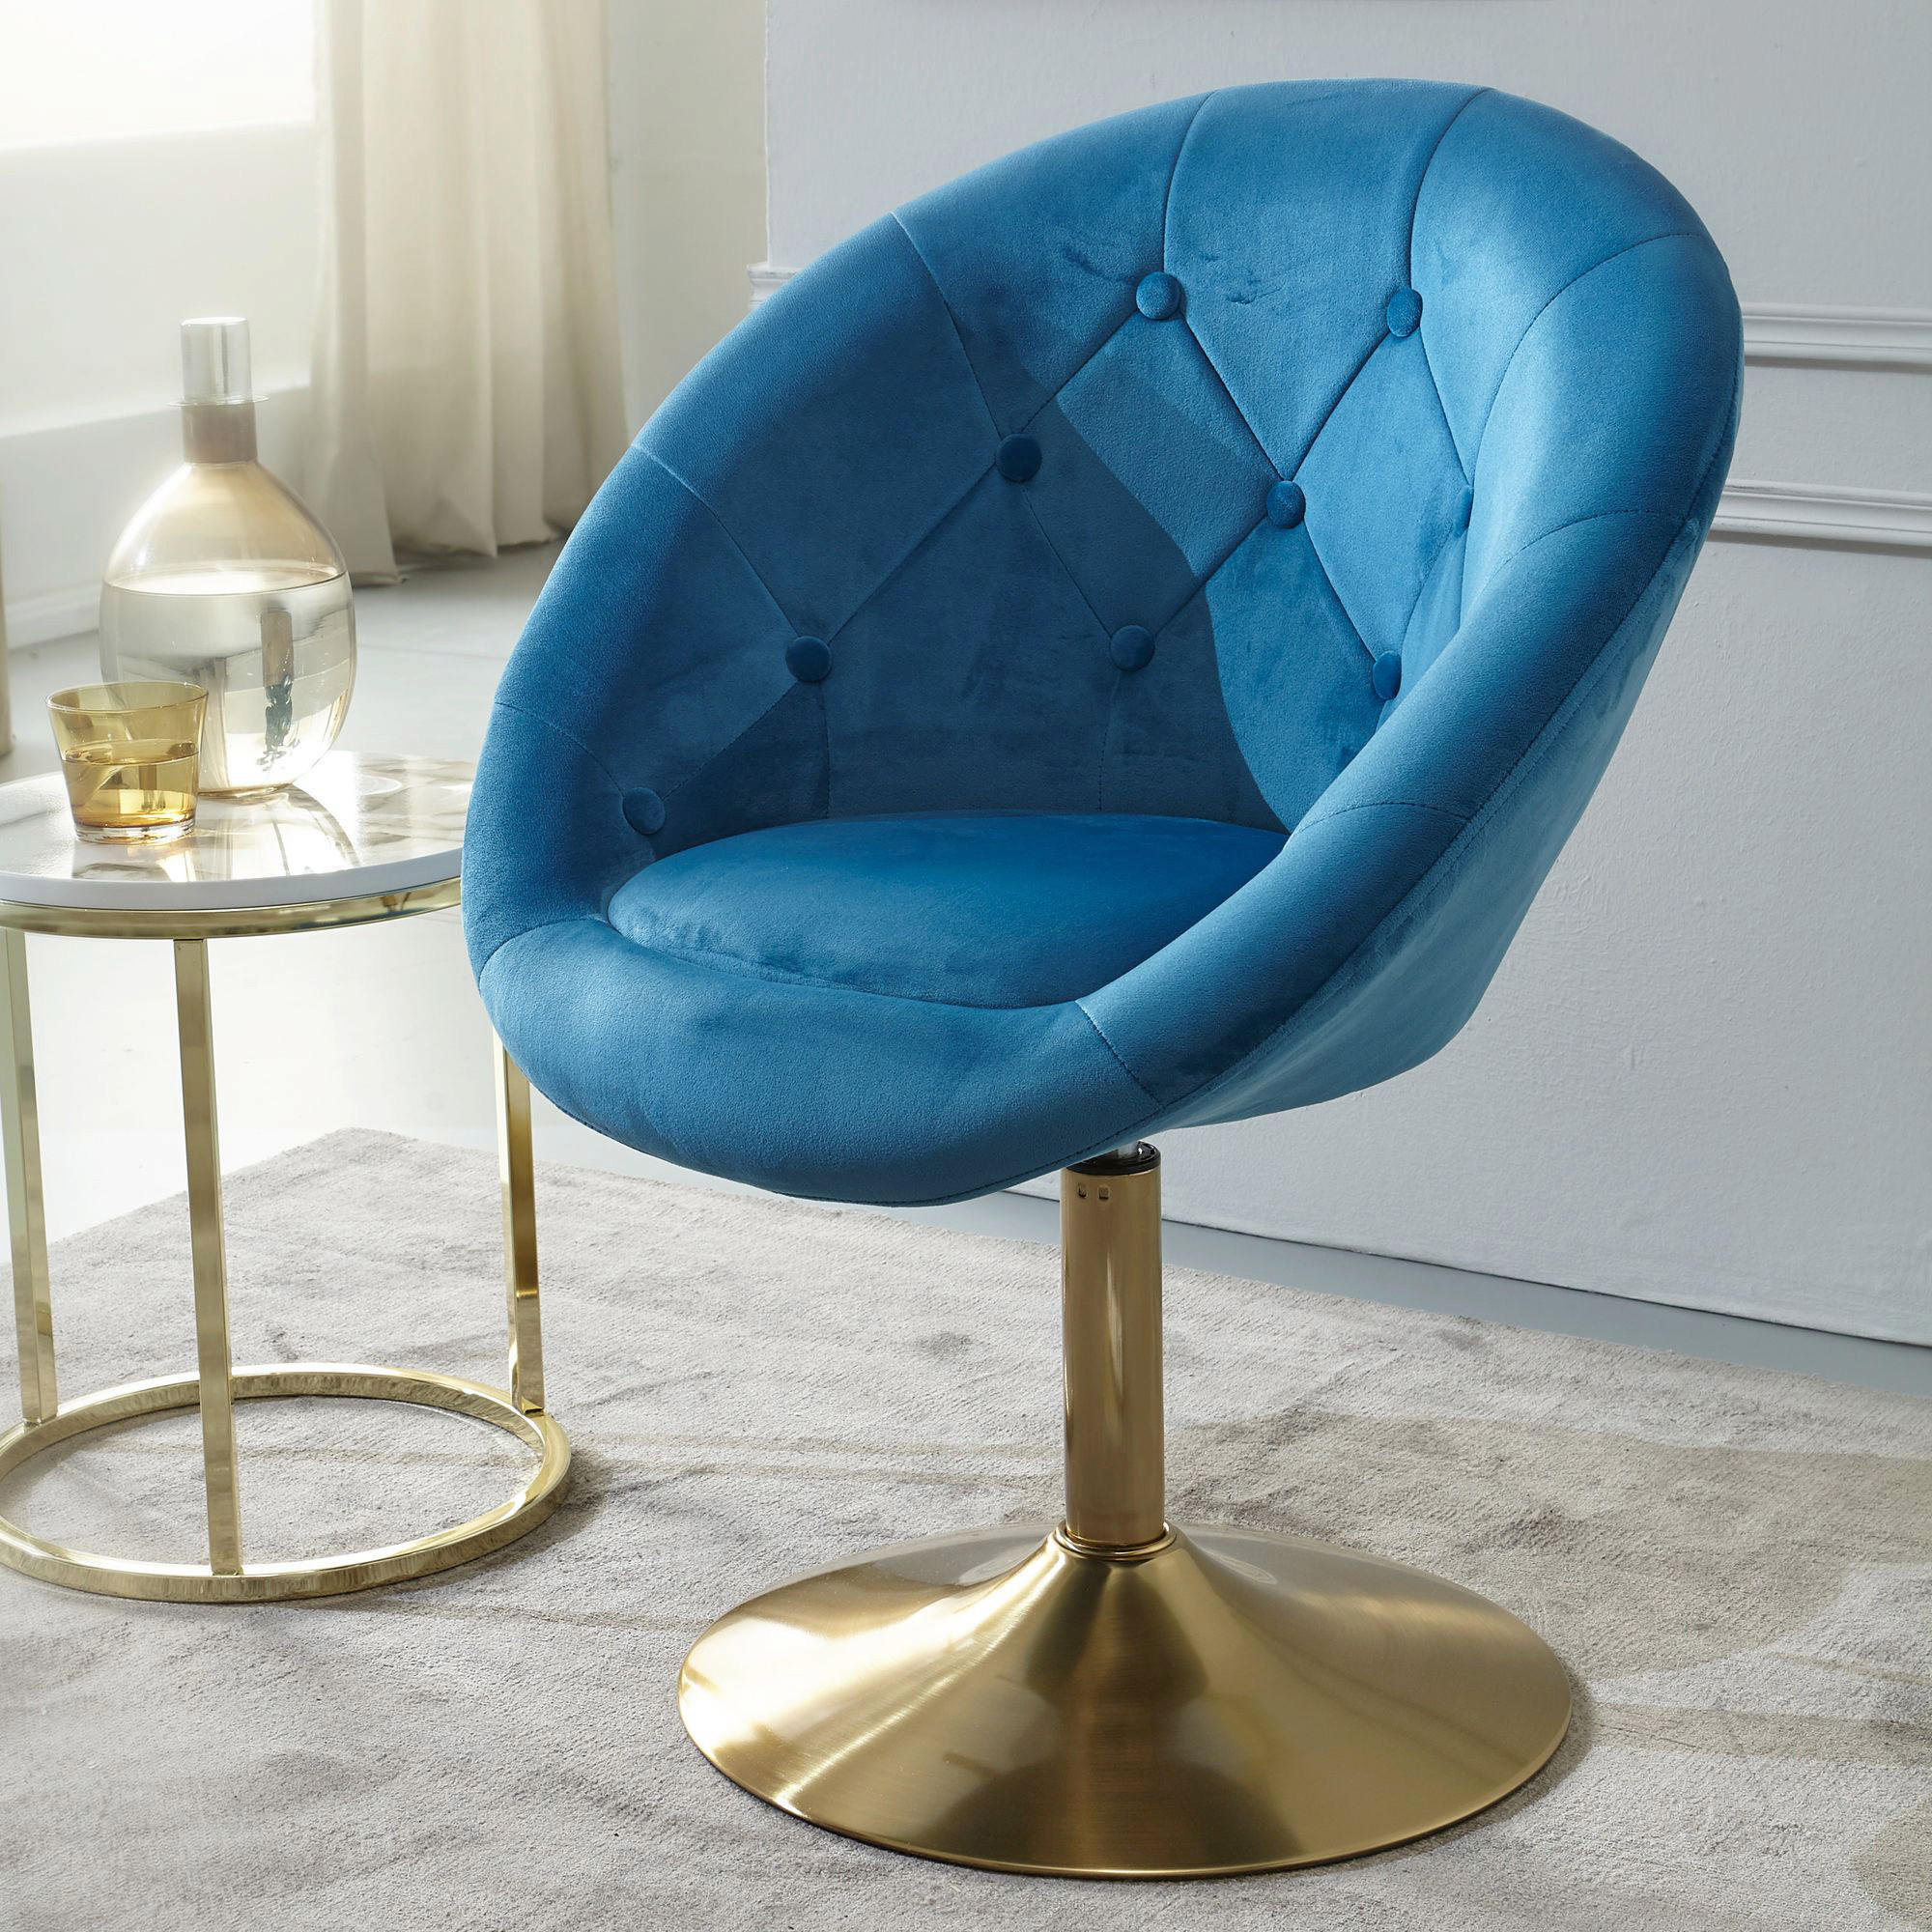 Wohnling Sessel blau gold Stoff Eisen Loungesessel - gold/blau